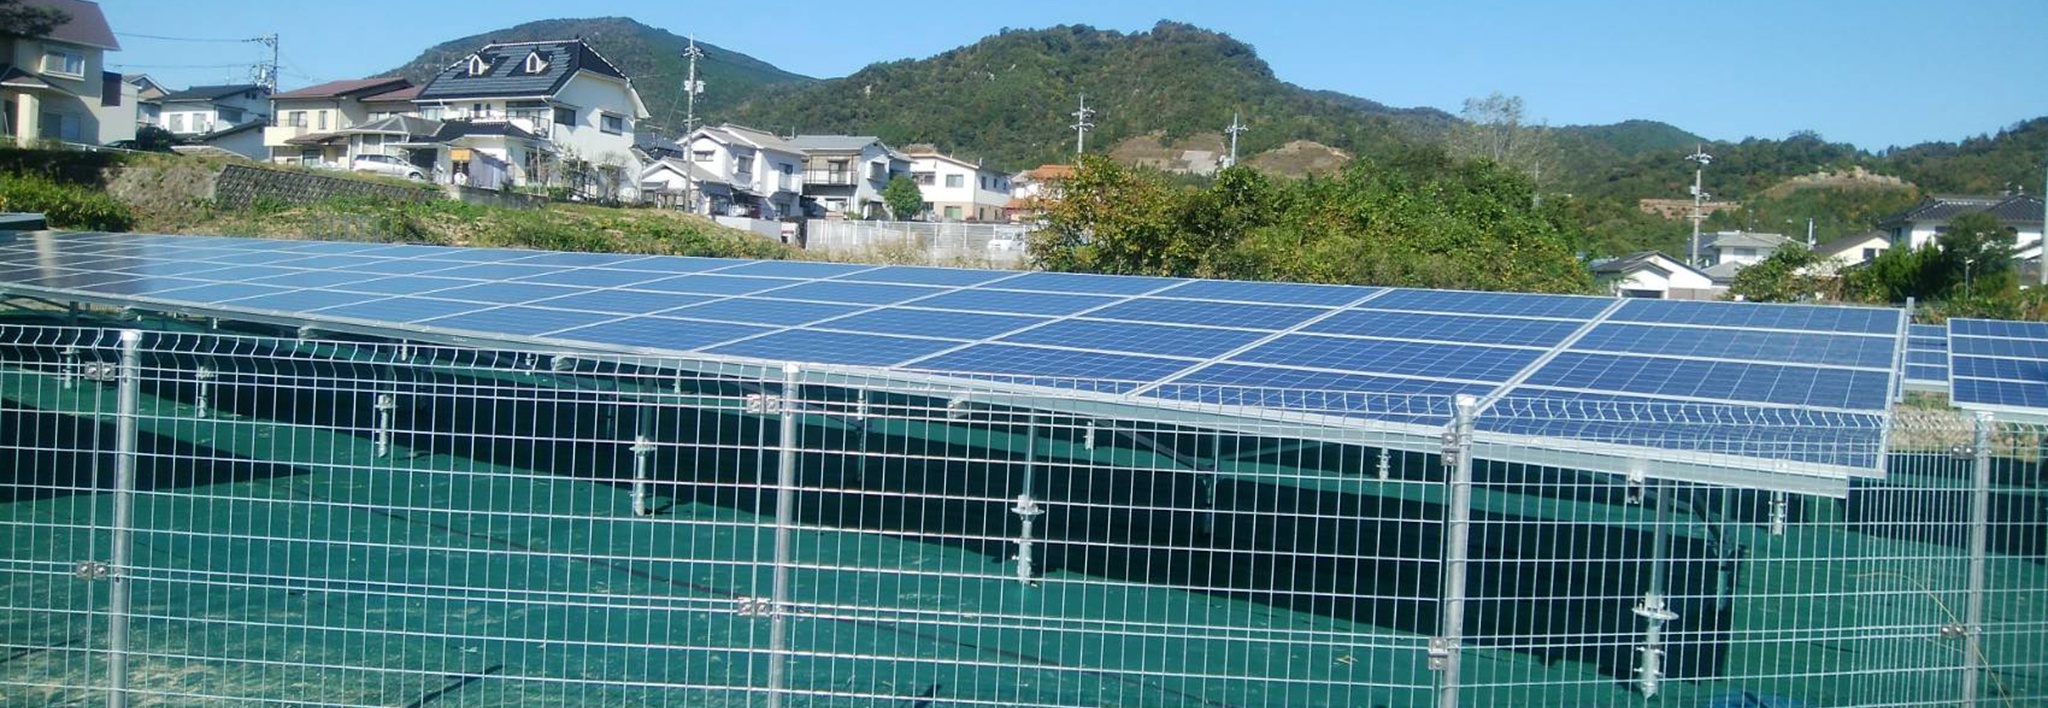 Clenergy PV-ezRack SteelFarm Solar Fencing Solution Solar Project 01